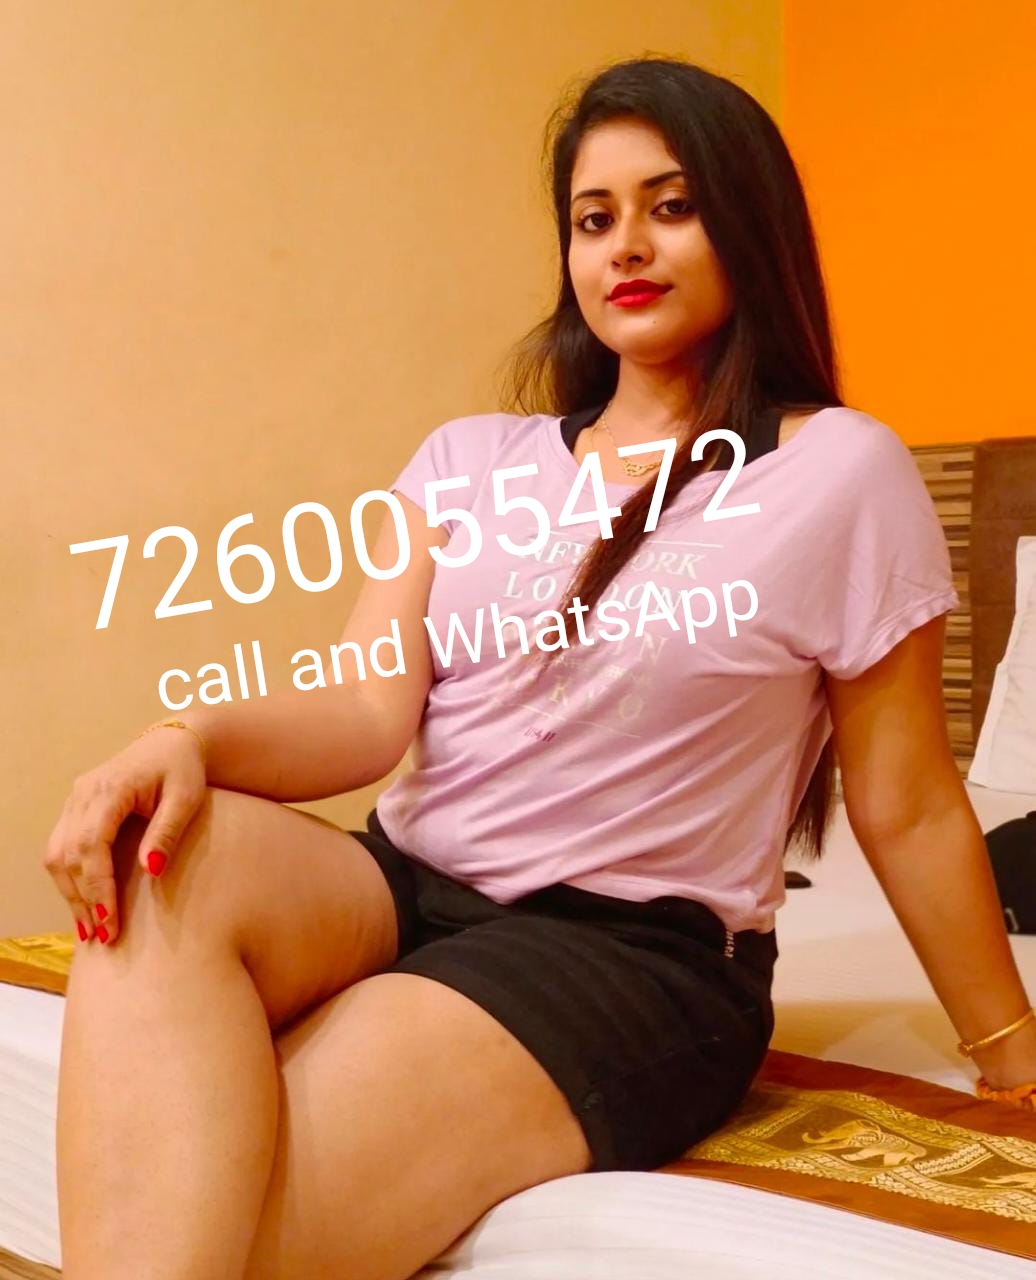 Nagpur call girl Vip model available service provide college girl hx